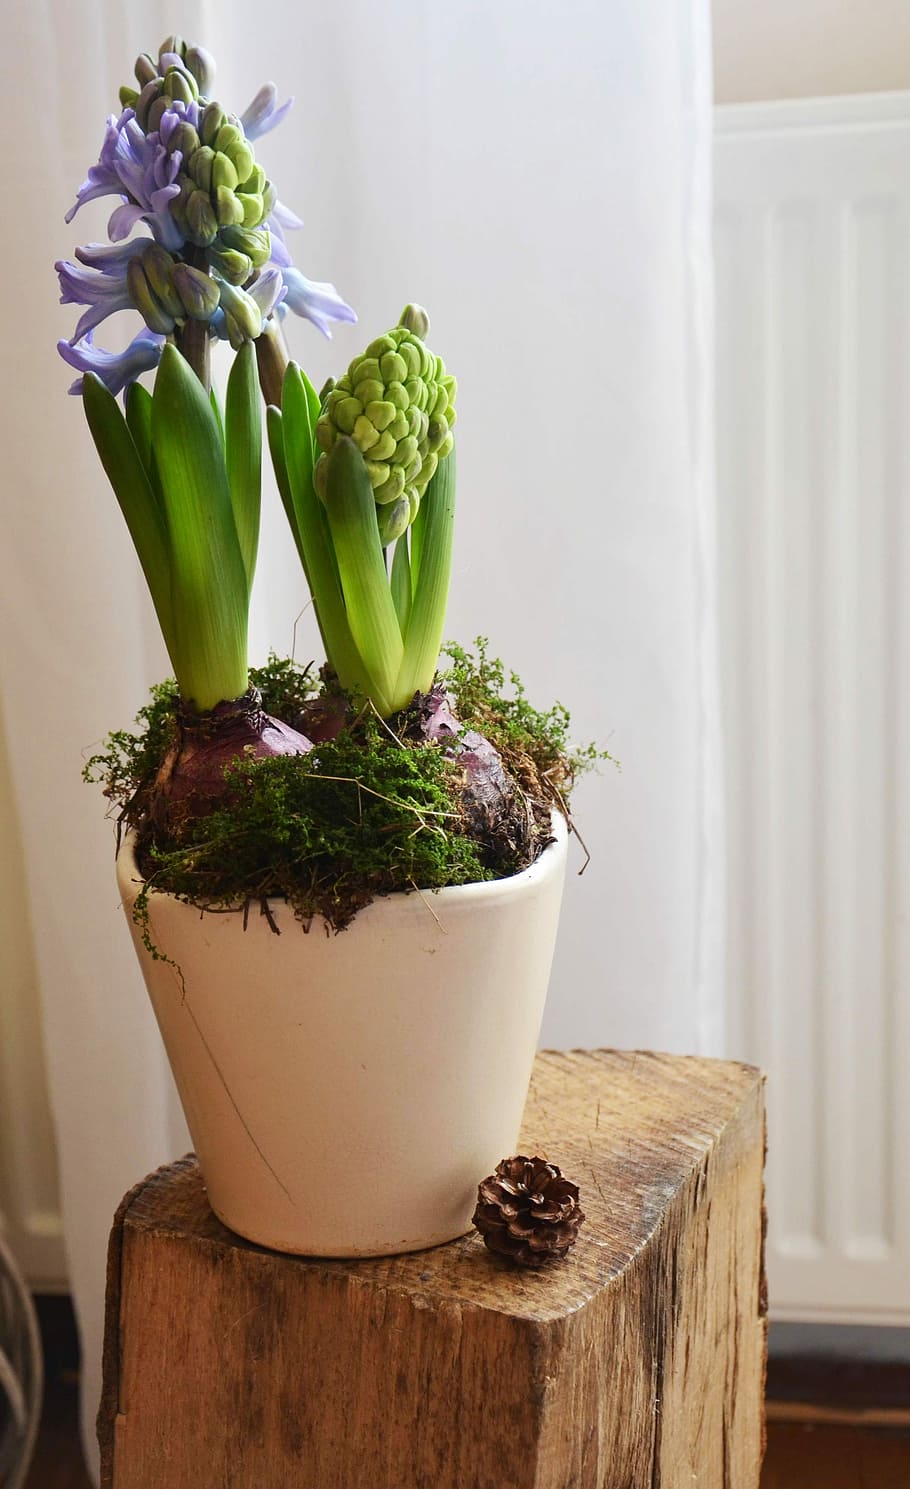 Jacinto, Flor, Primavera, vasos de plantas, natureza, casa, violeta, dentro de casa, vaso, frescura